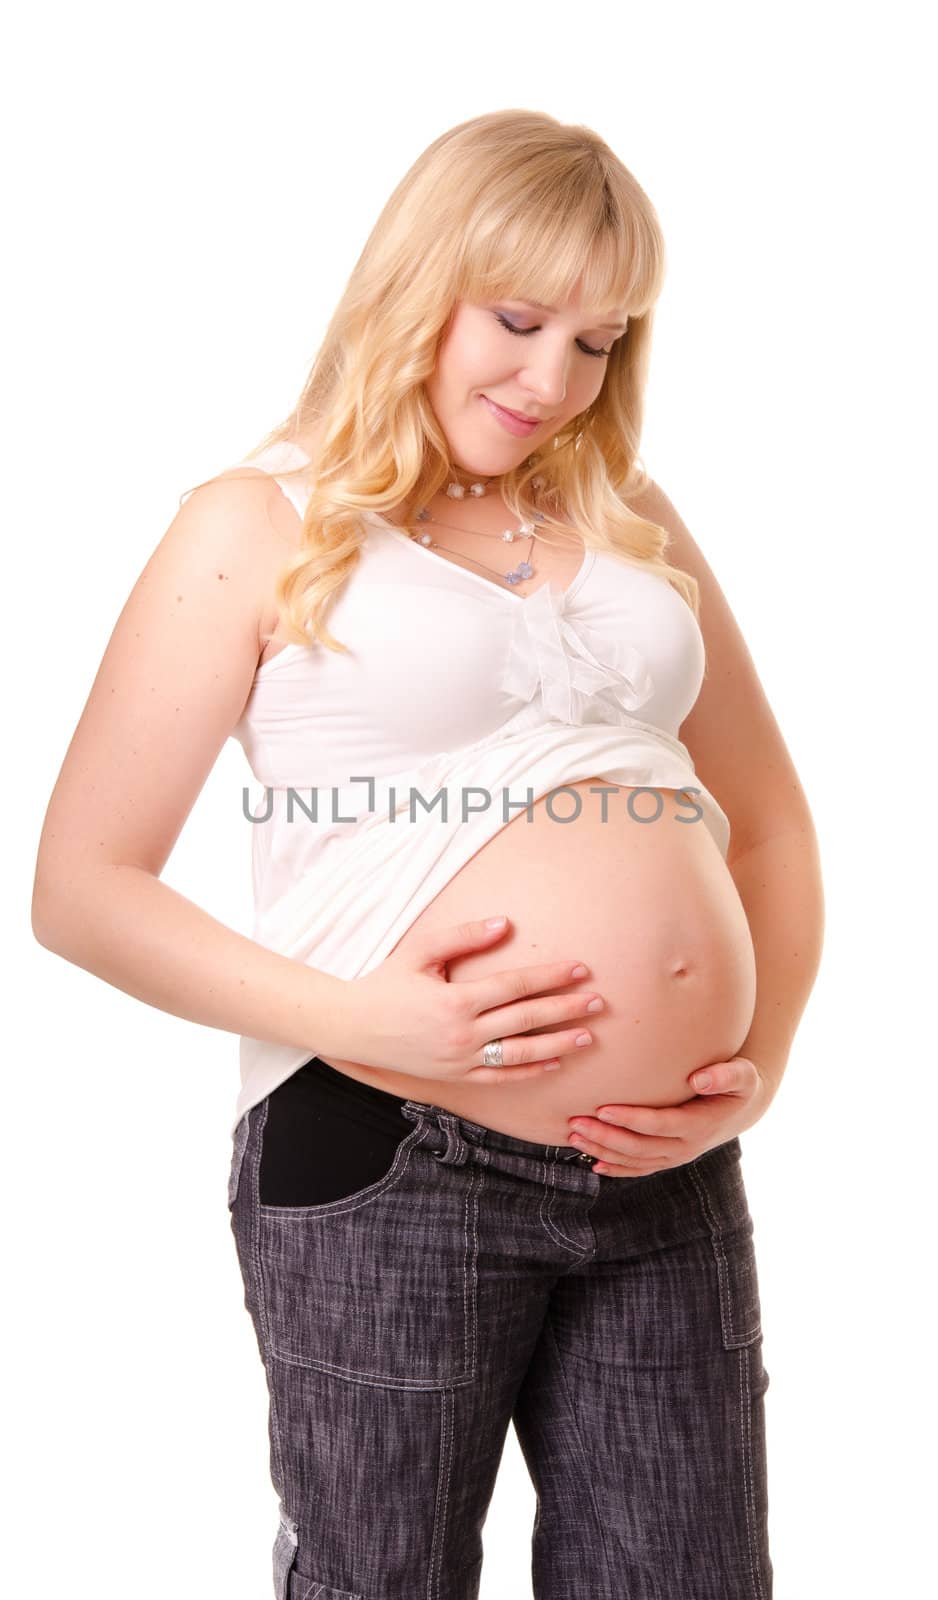 Pregnant woman caressing her belly by iryna_rasko